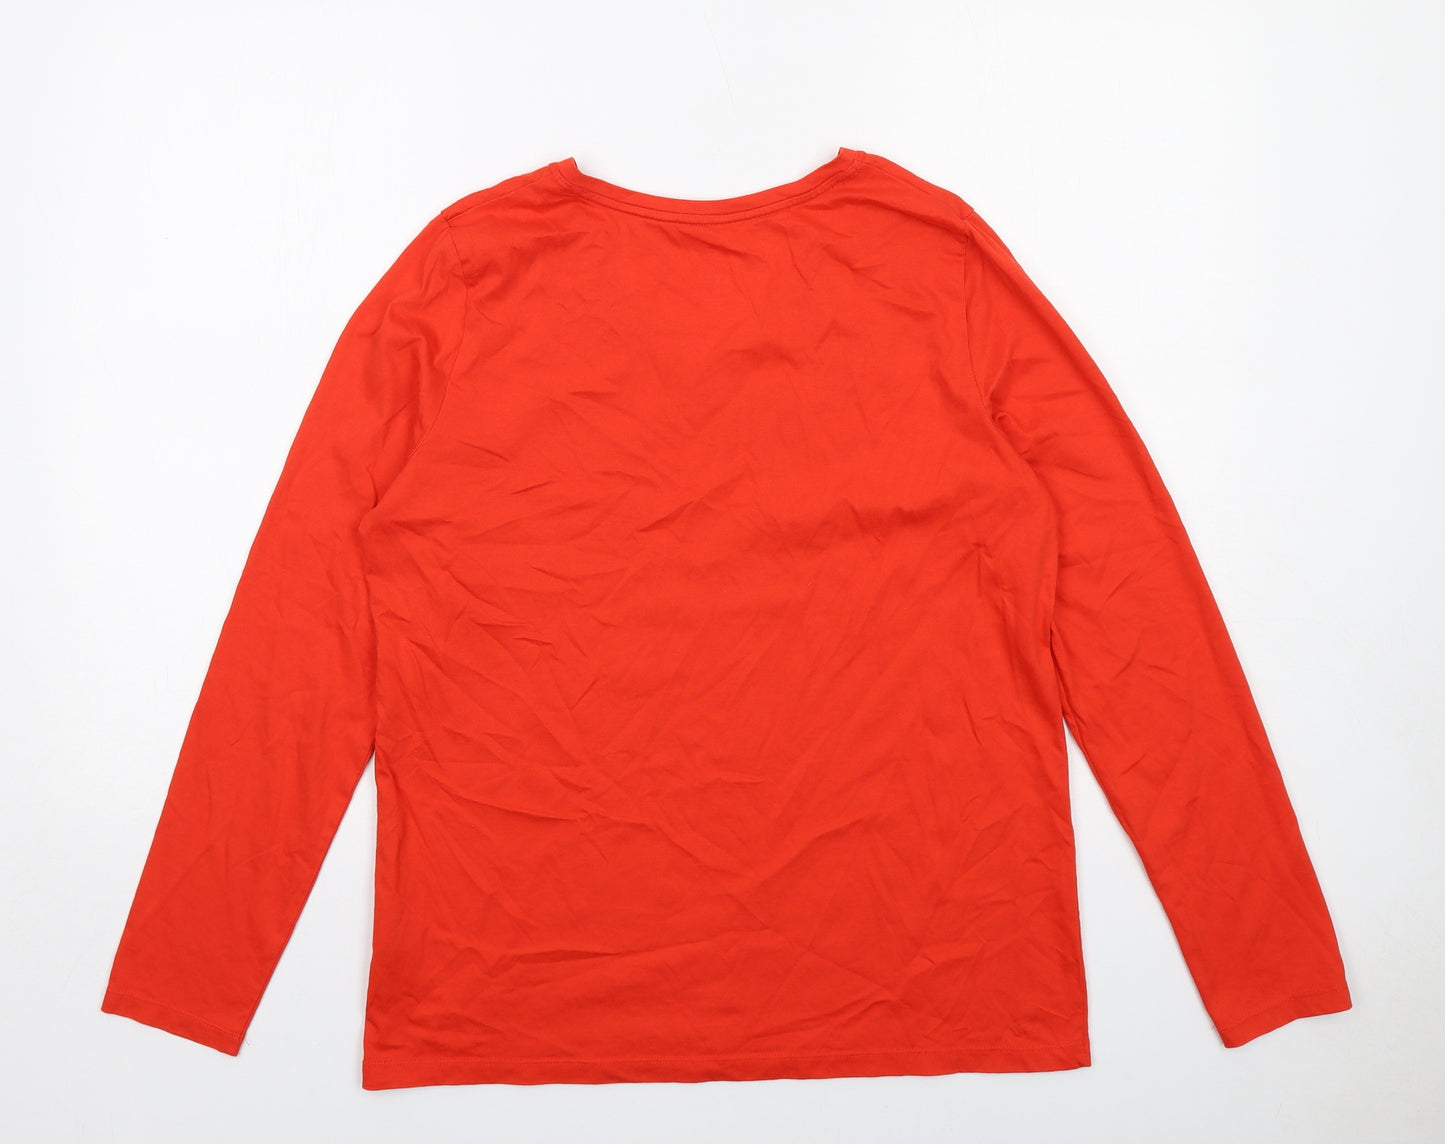 Lands' End Womens Red Cotton Basic T-Shirt Size S V-Neck